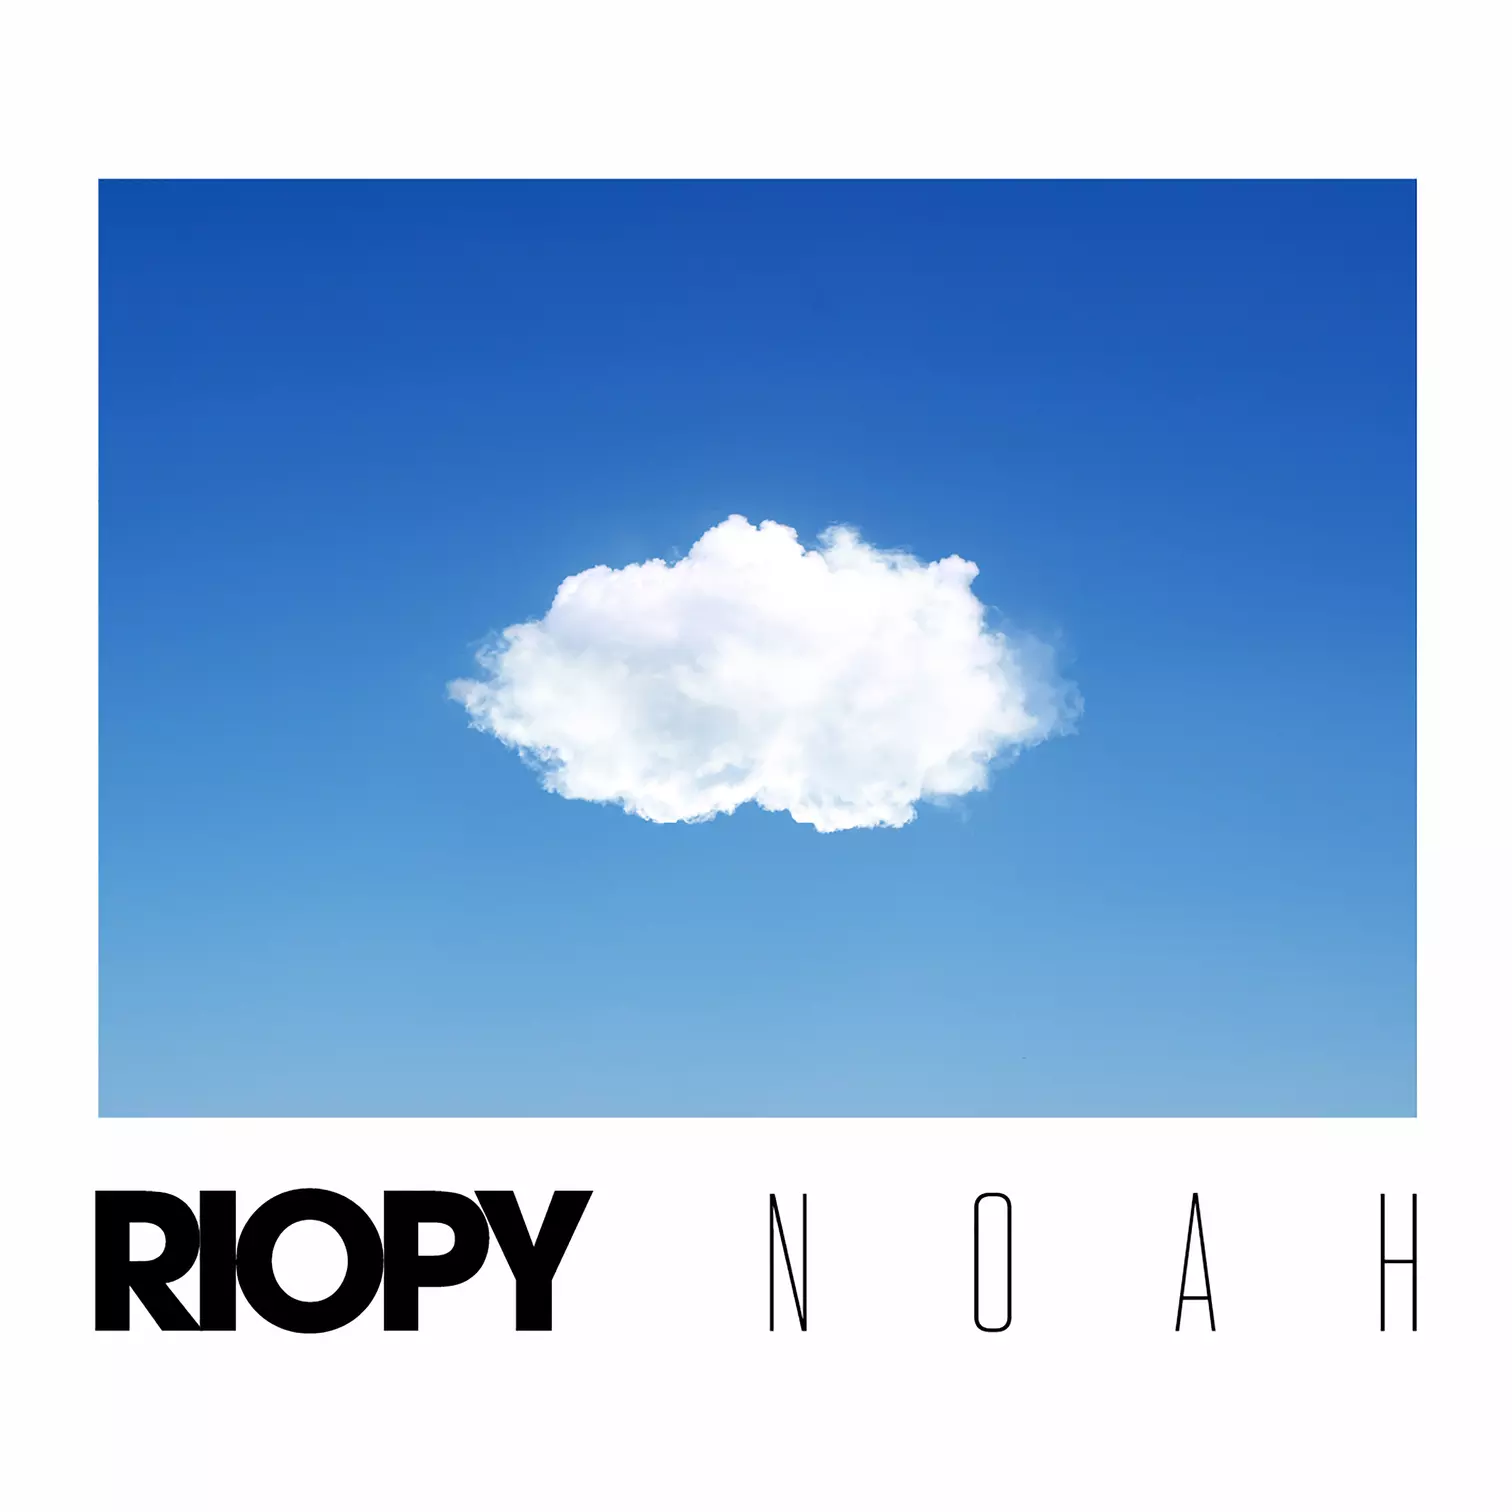 Noah by RIOPY